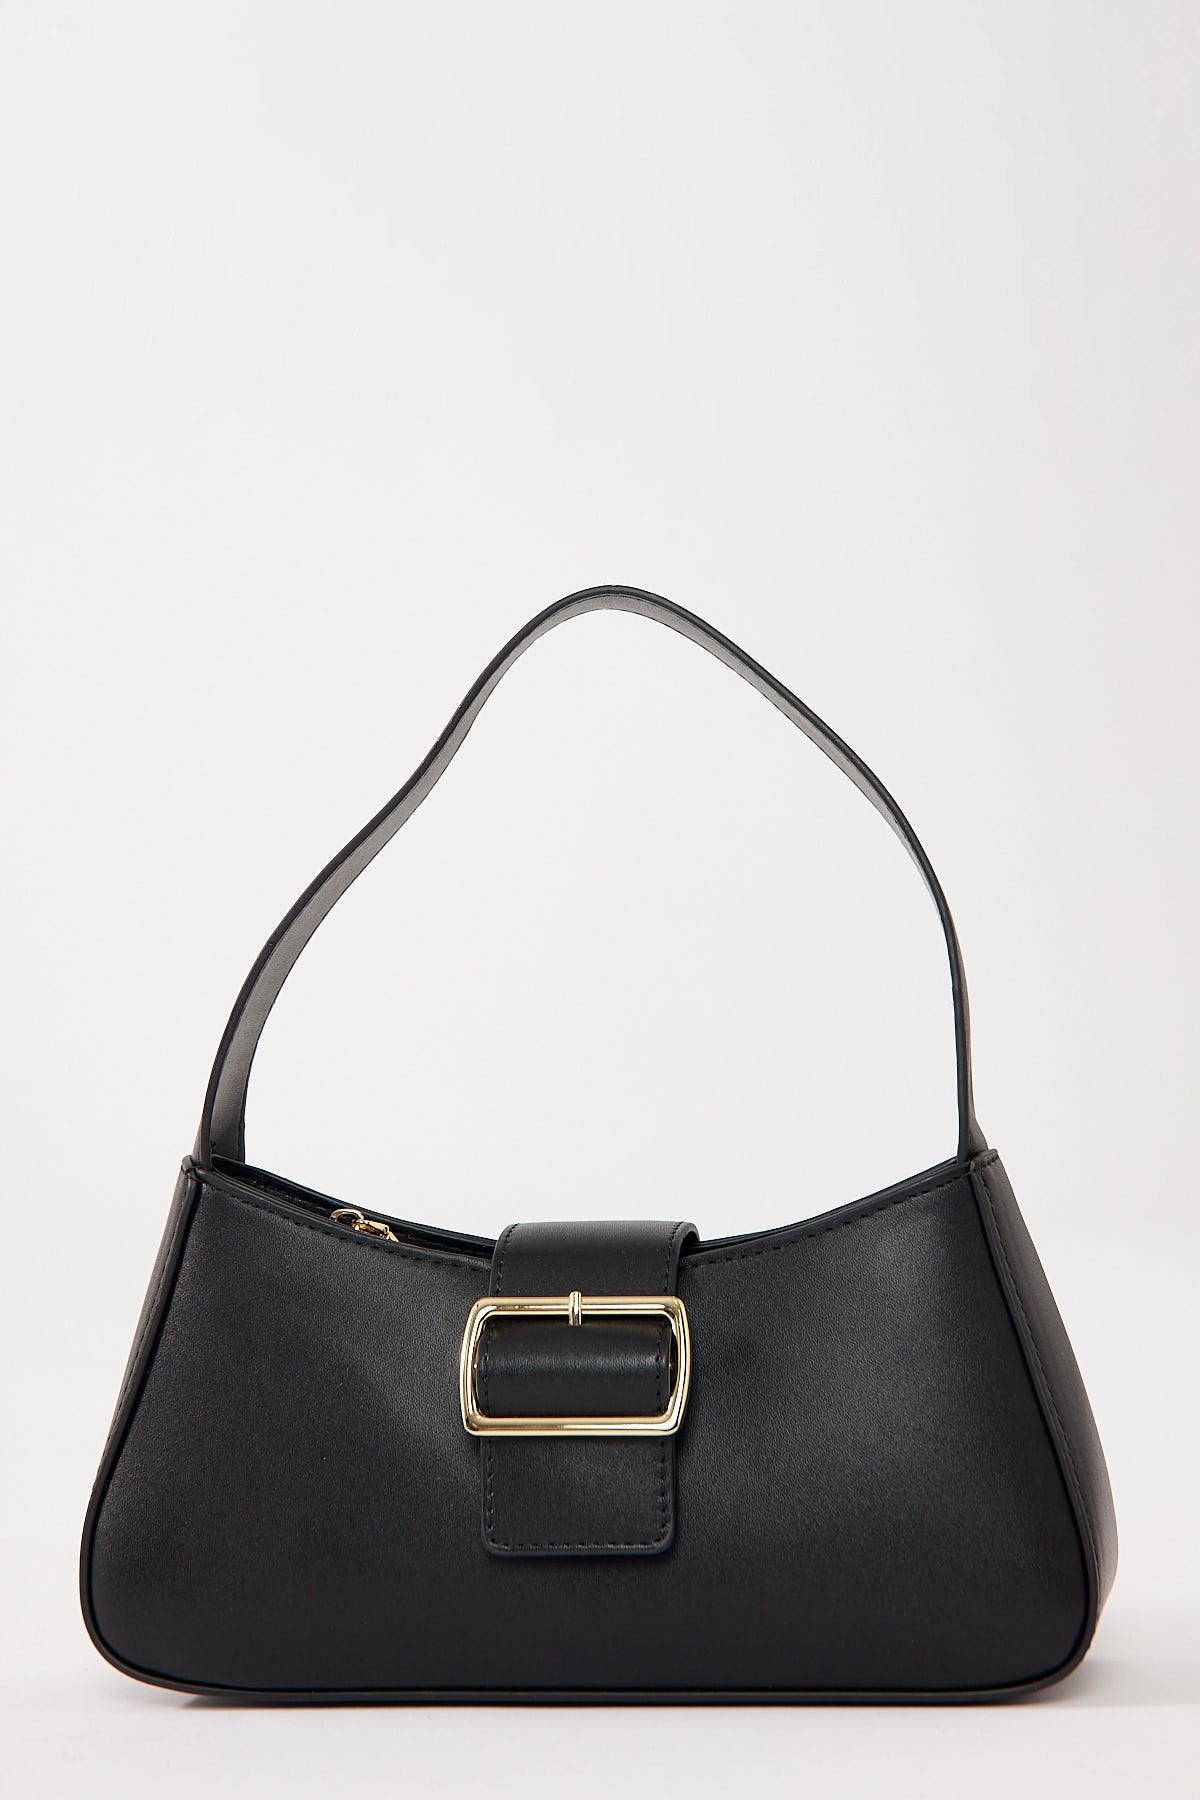 Perfect Stranger Layla Handbag Black